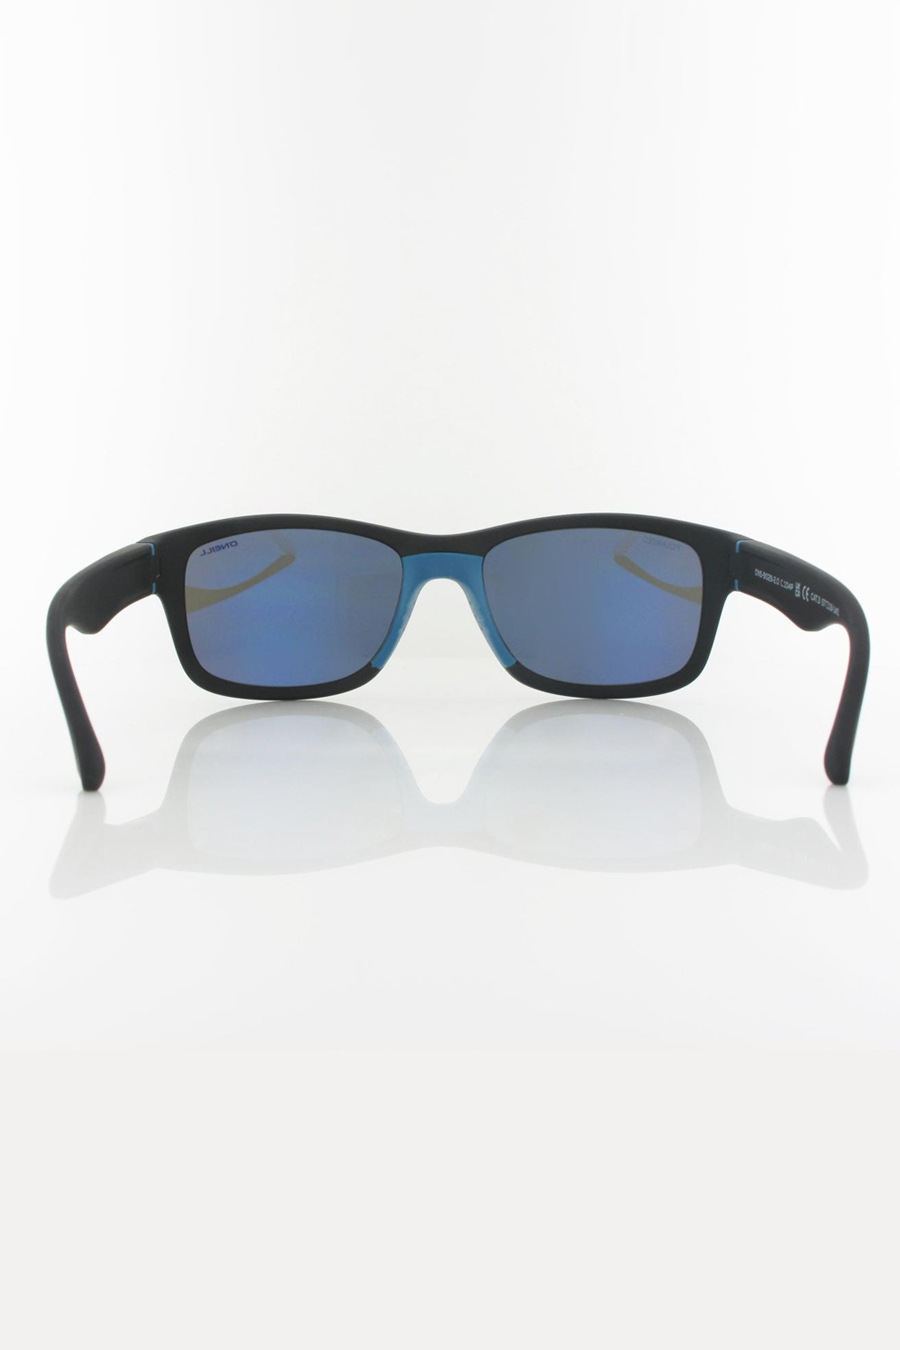 Sunglasses ONEILL ONS-9029-20-104P